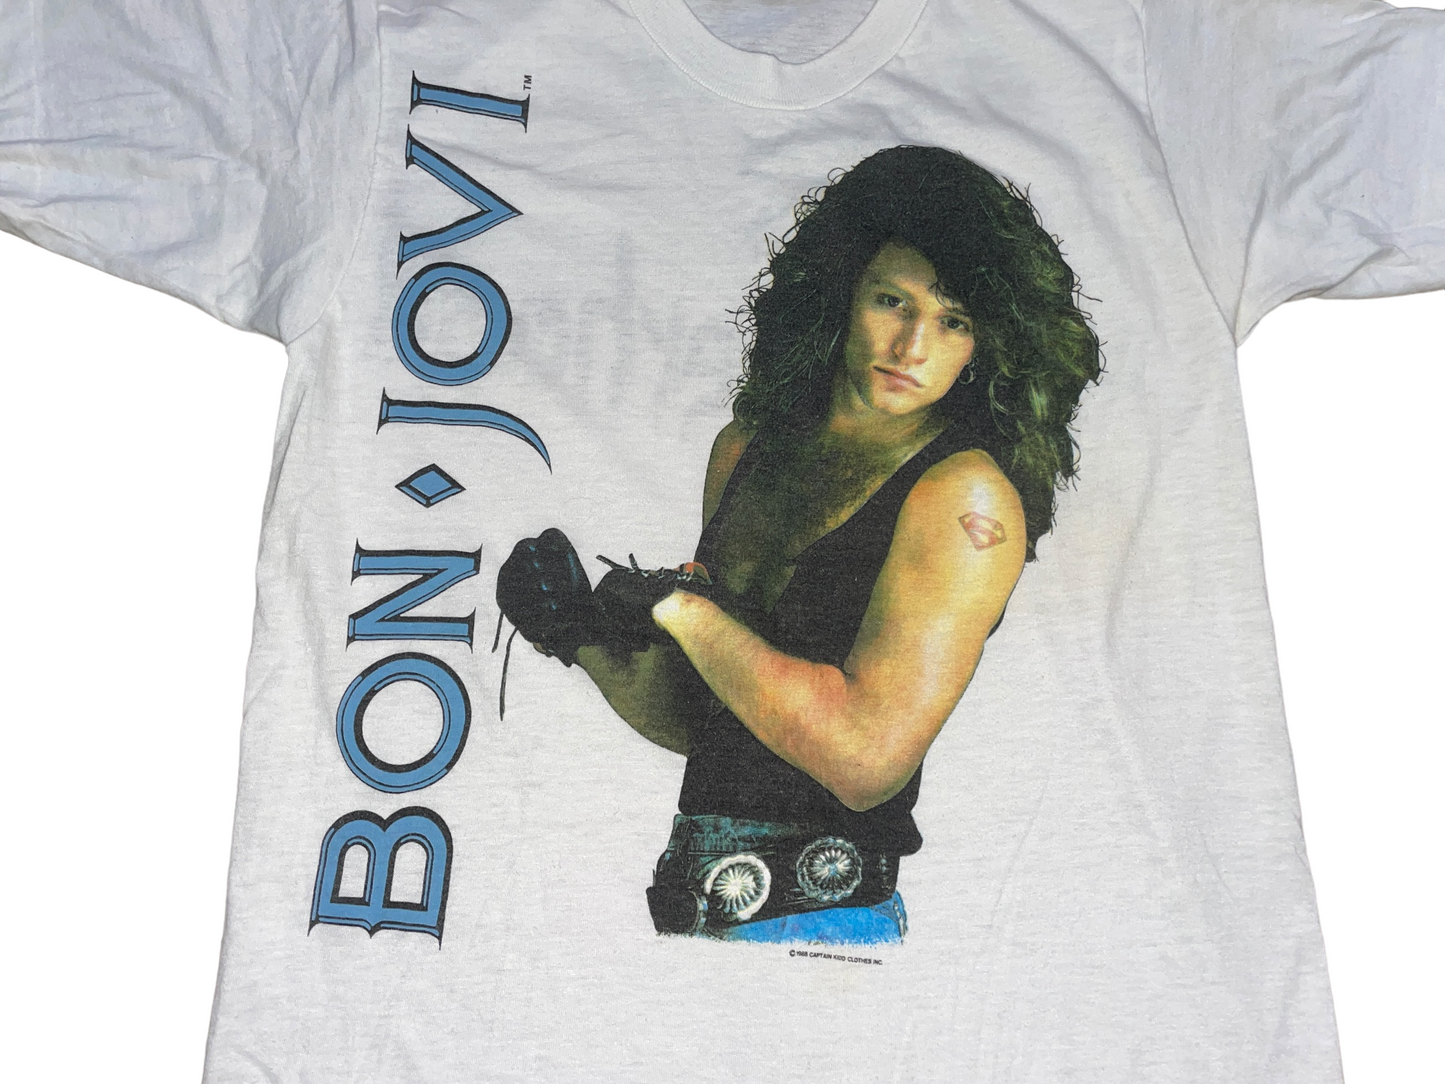 Vintage 1988 Bon Jovi The Brotherhood T-Shirt